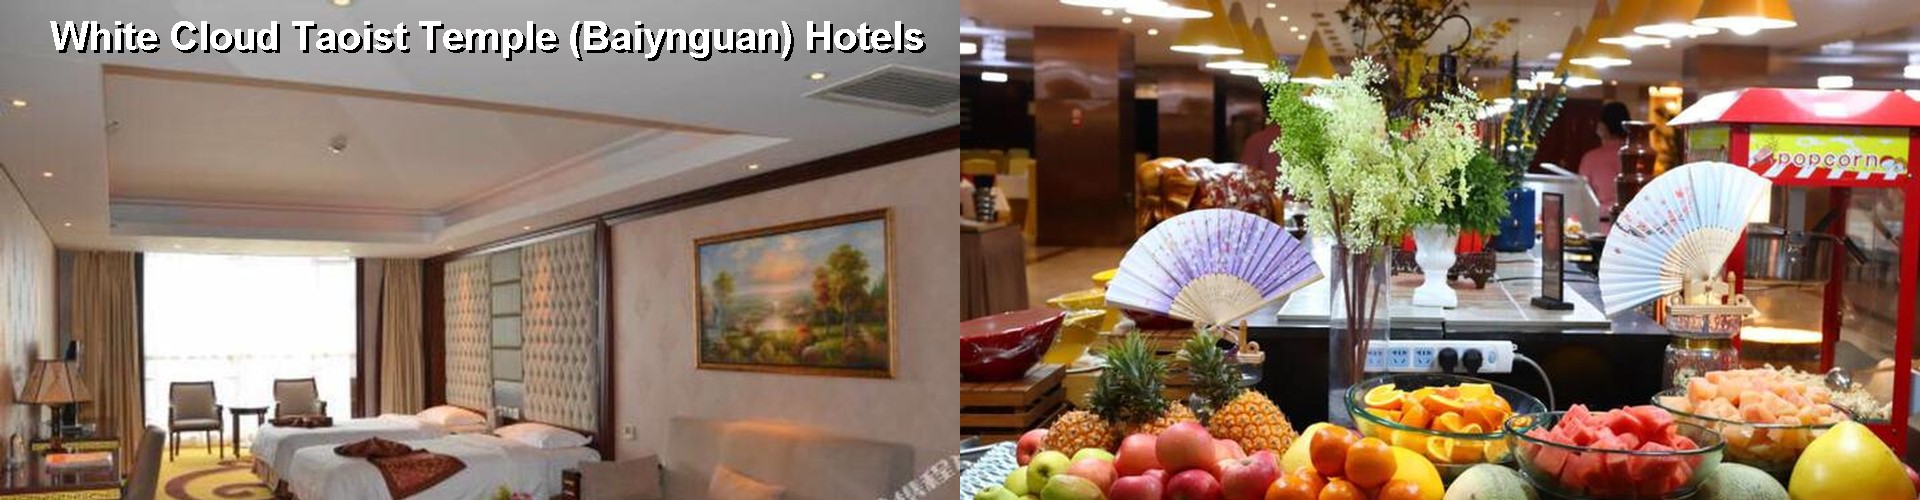 5 Best Hotels near White Cloud Taoist Temple (Baiynguan)